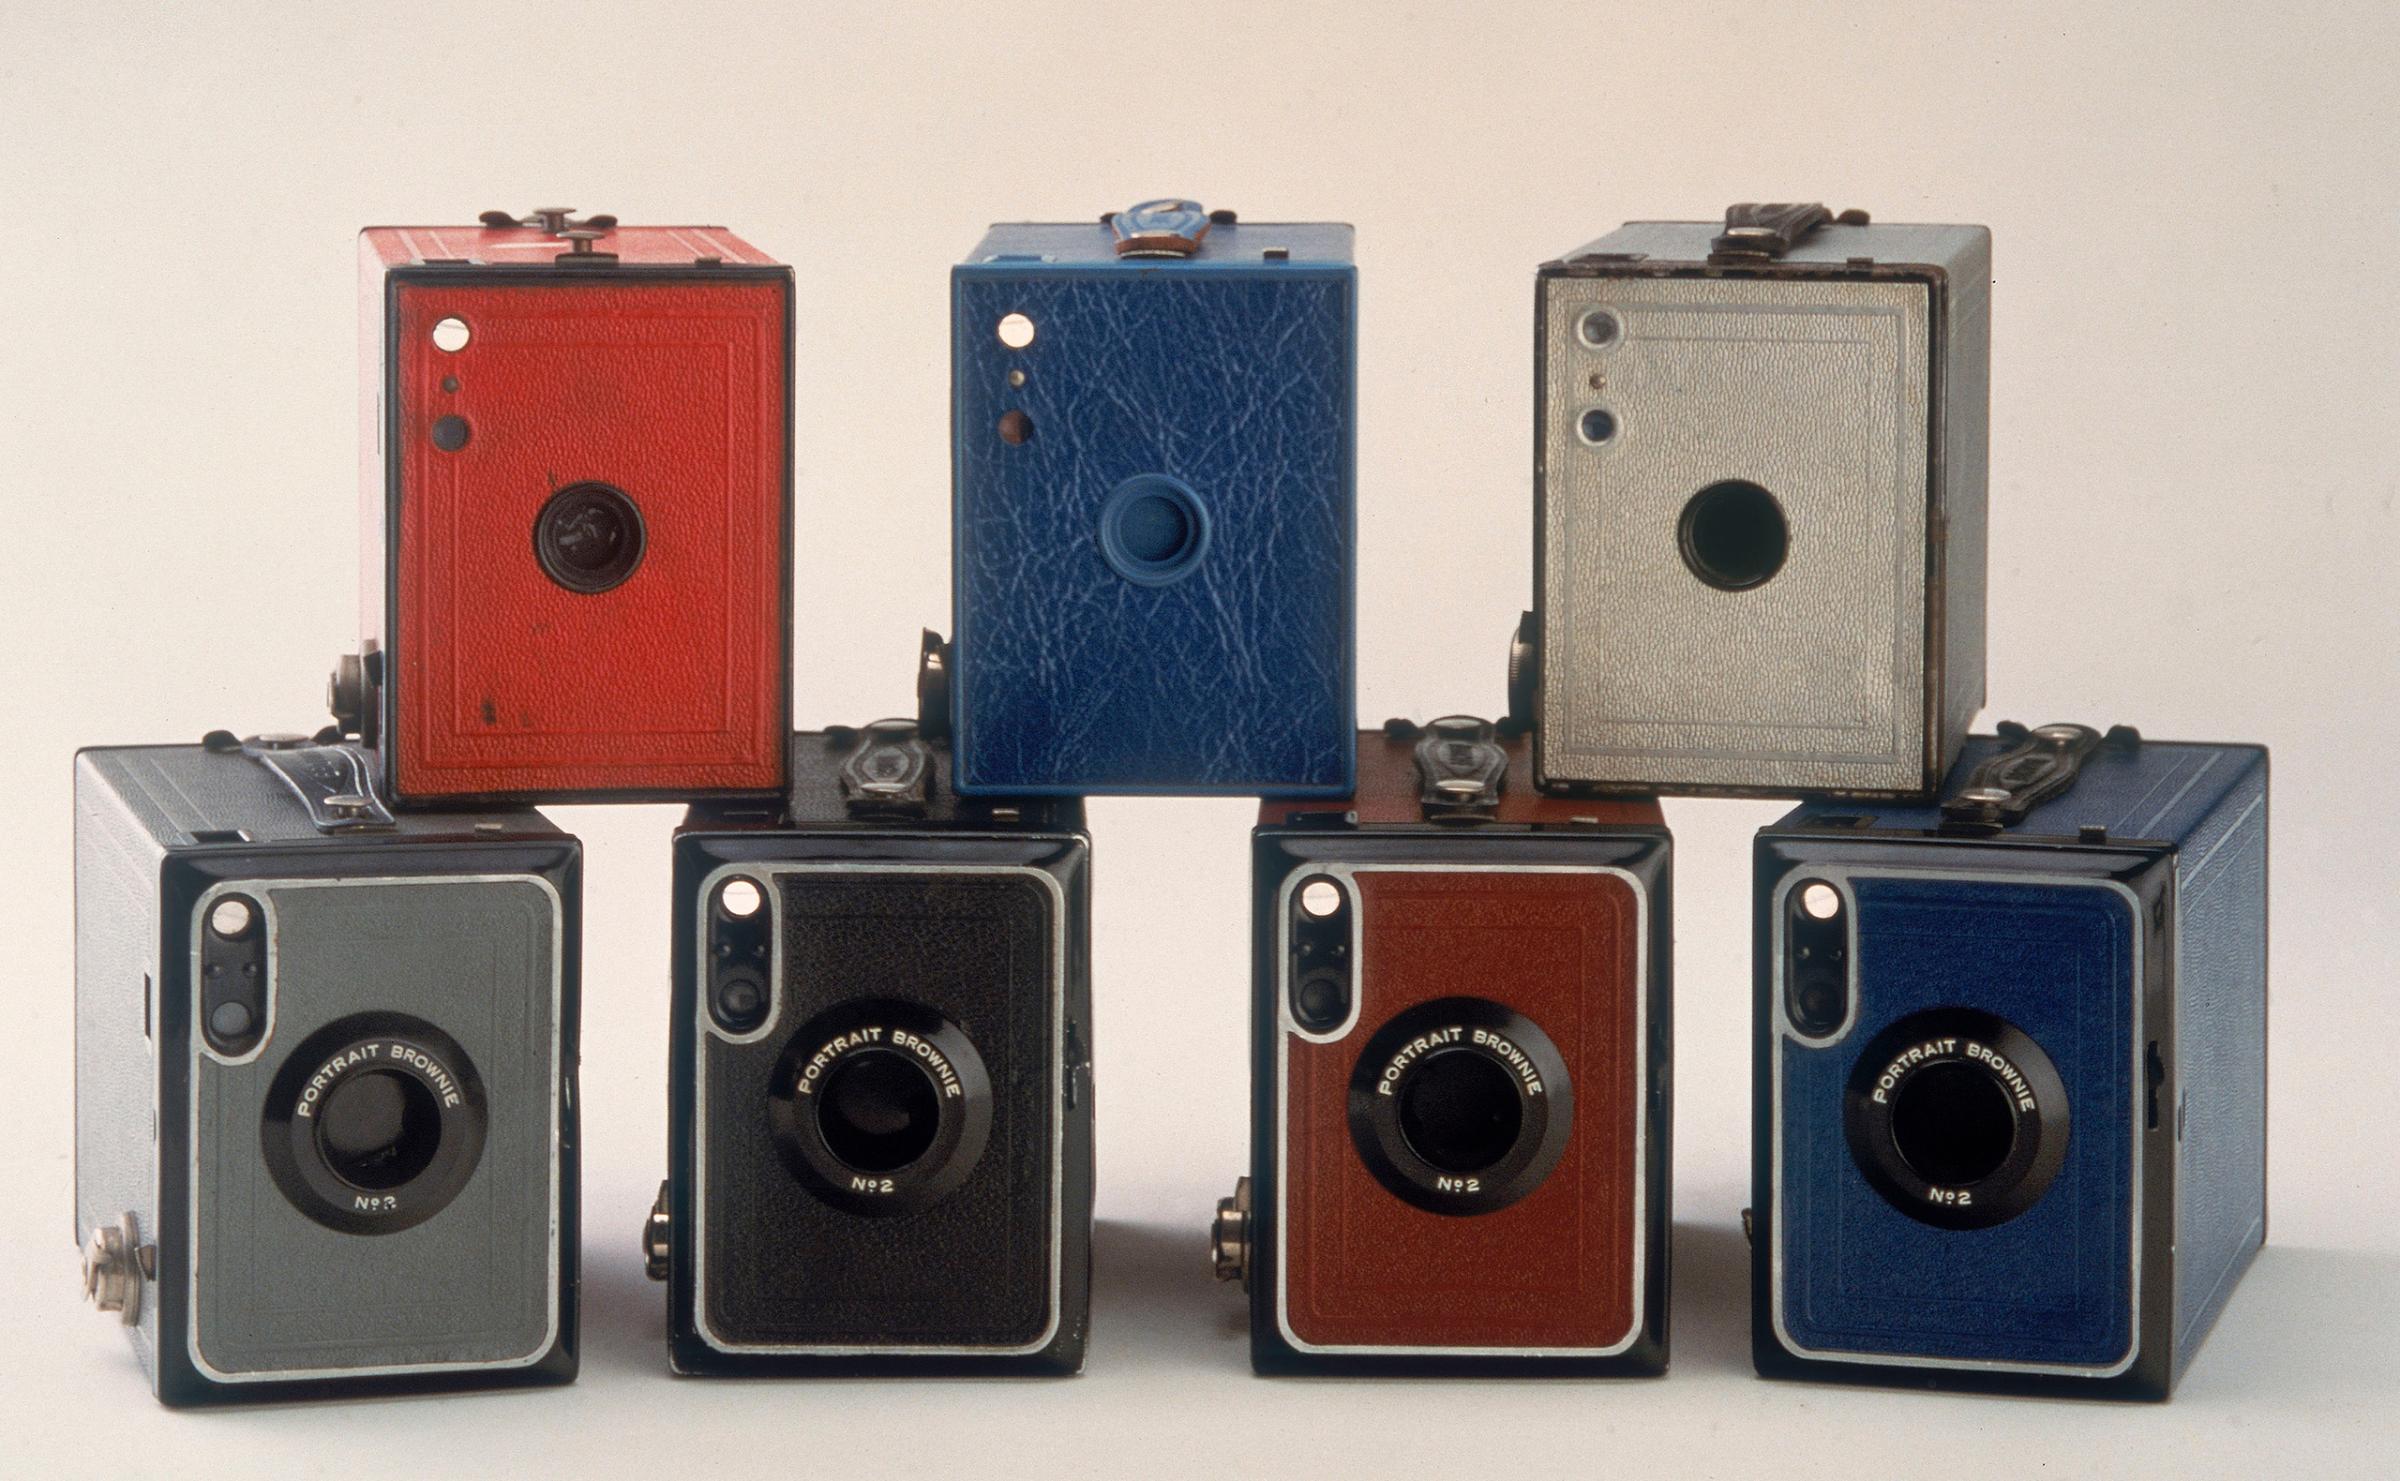 No 2 Portrait Brownie cameras in ï¿½fashionï¿½ colours, 1929-1935.